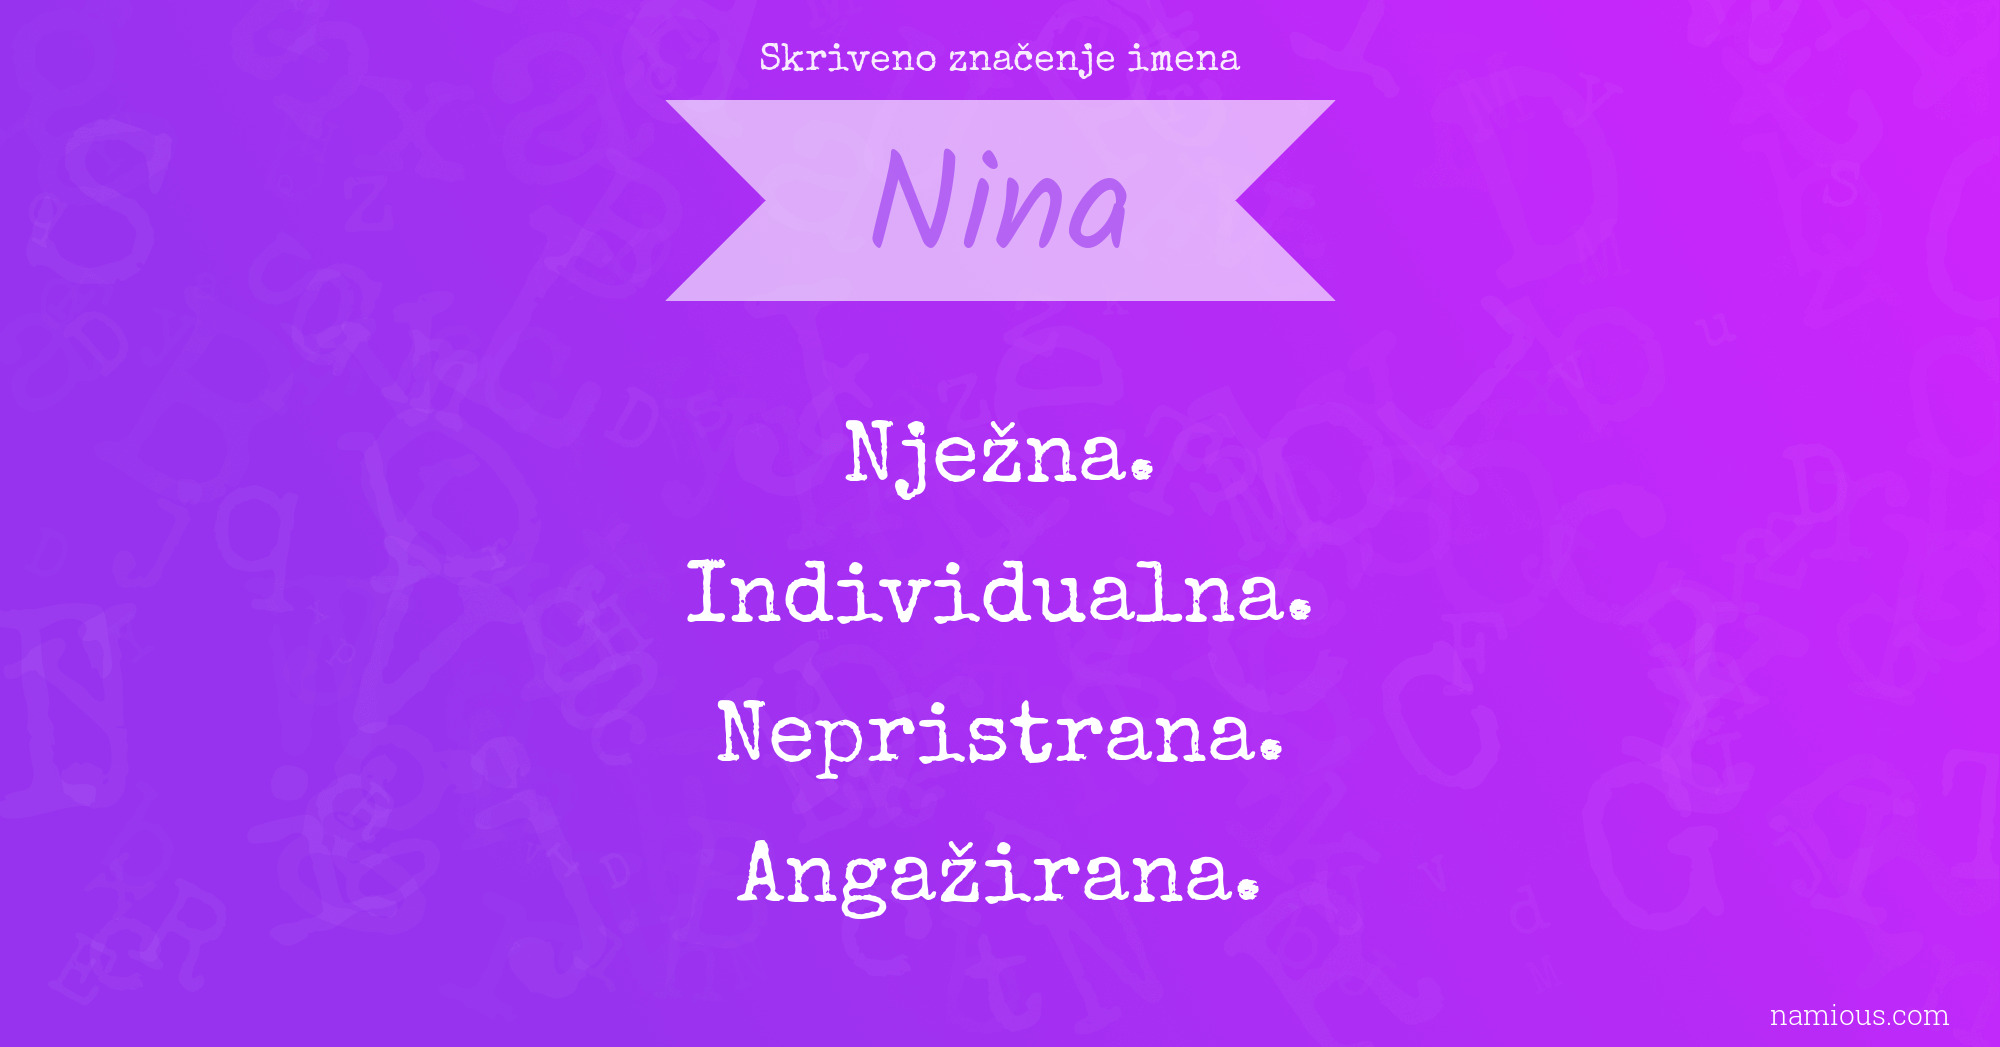 Skriveno značenje imena Nina